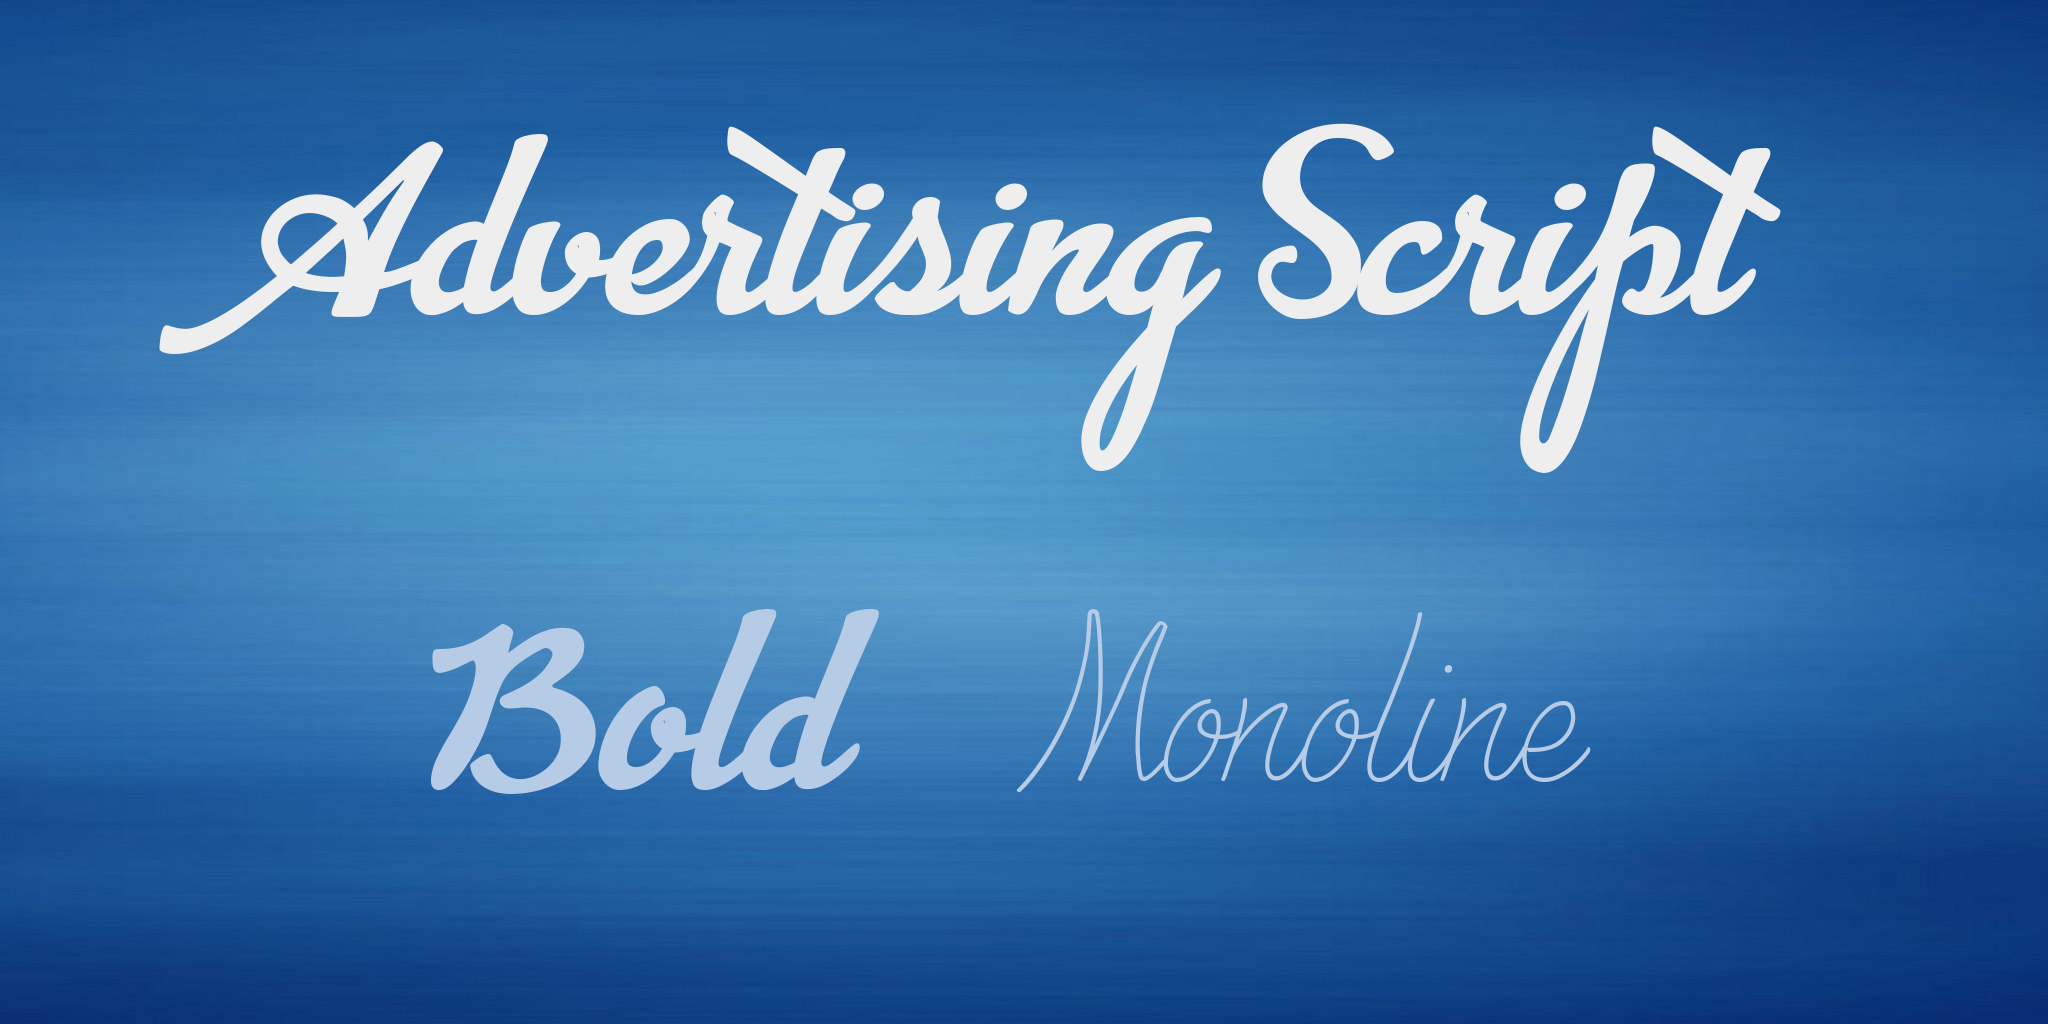 Advertising Script